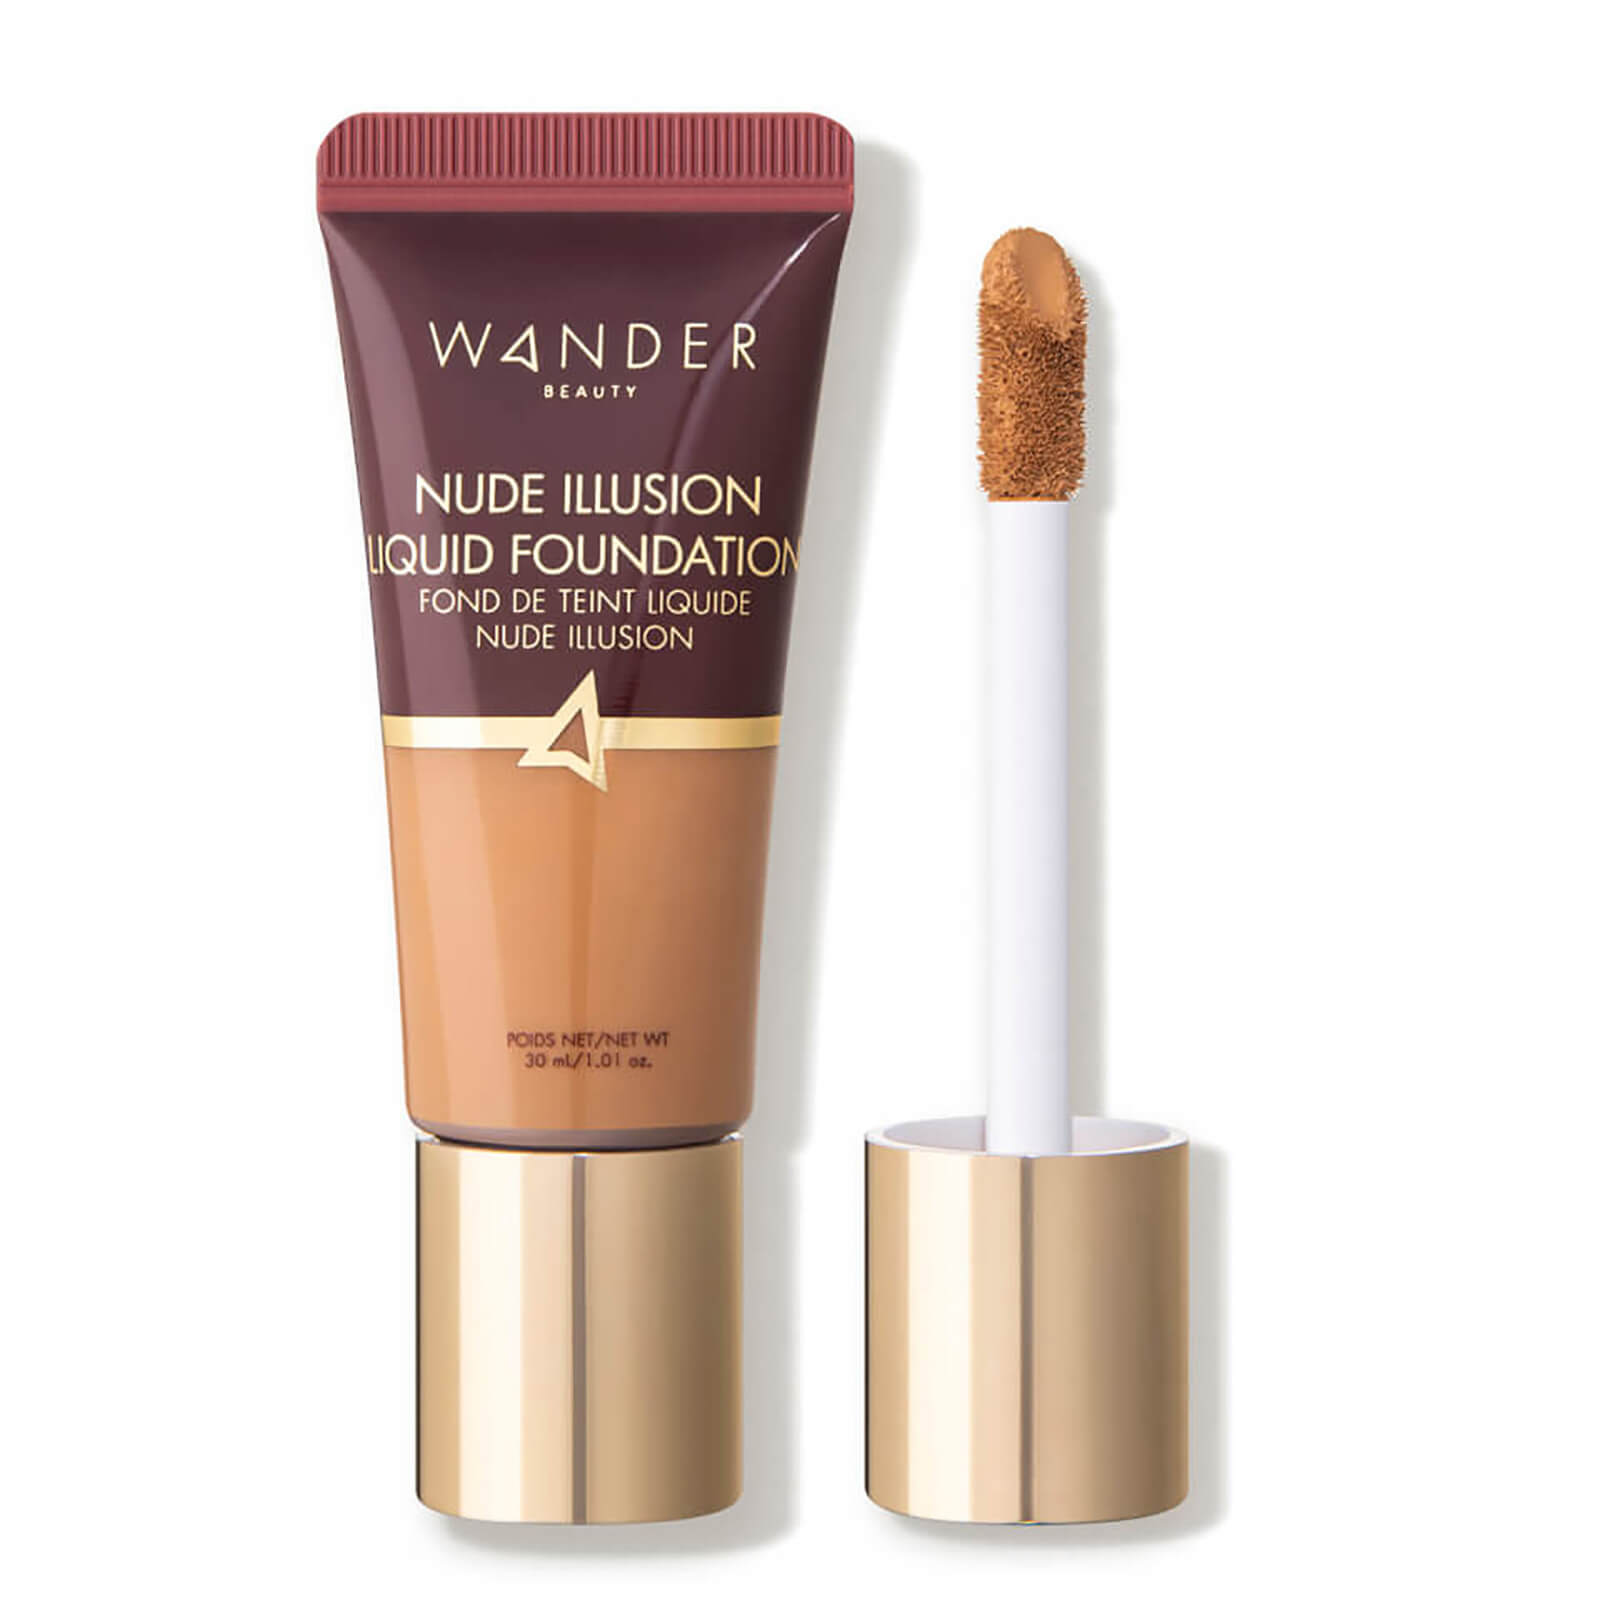 Wander Beauty Nude Illusion Liquid Foundation 1.01 oz (Various Shades) - Golden Tan